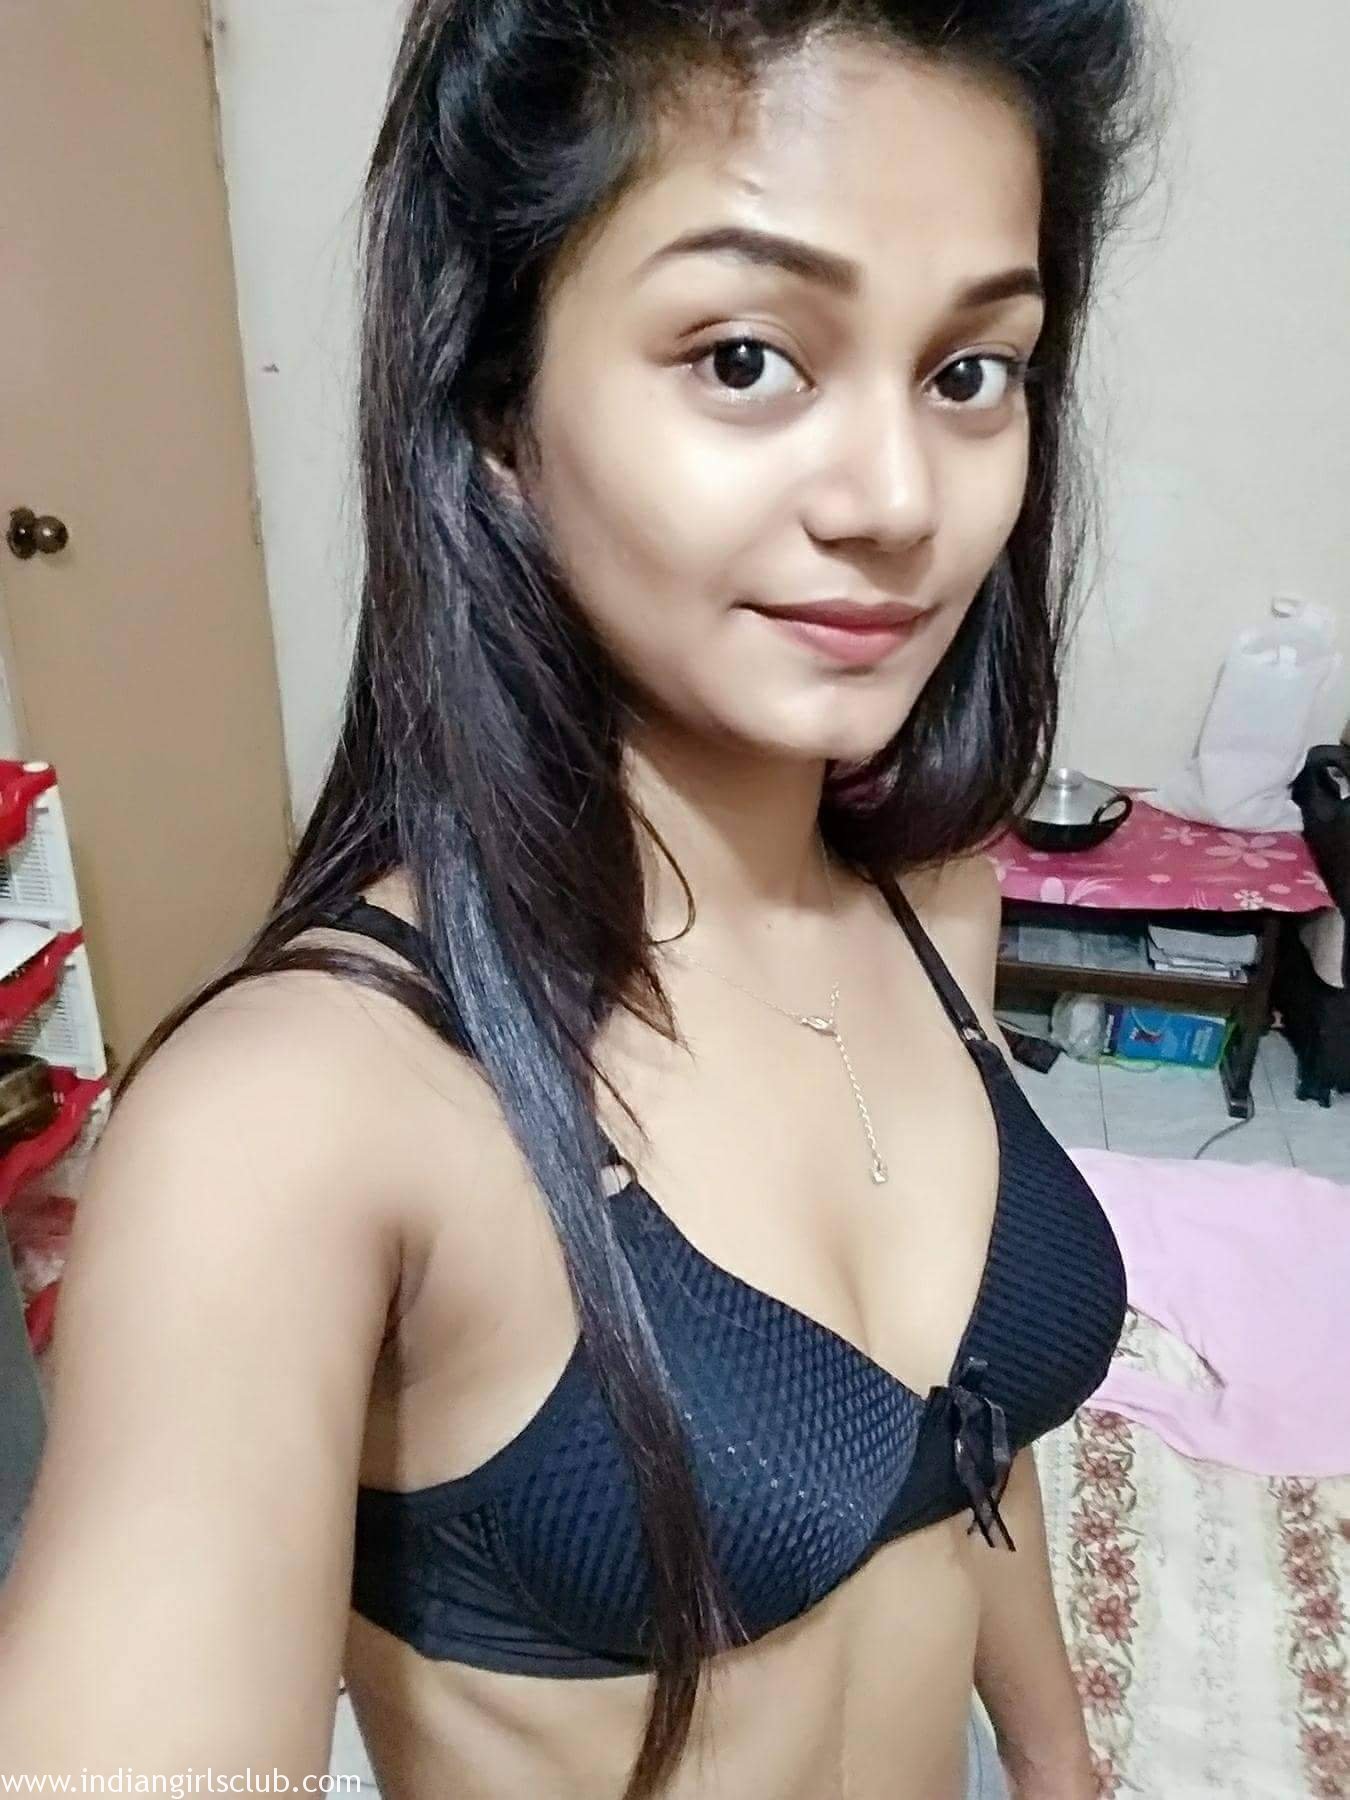 juicy_indian_teen_homemade_porn_20 - Indian Girls Club image image